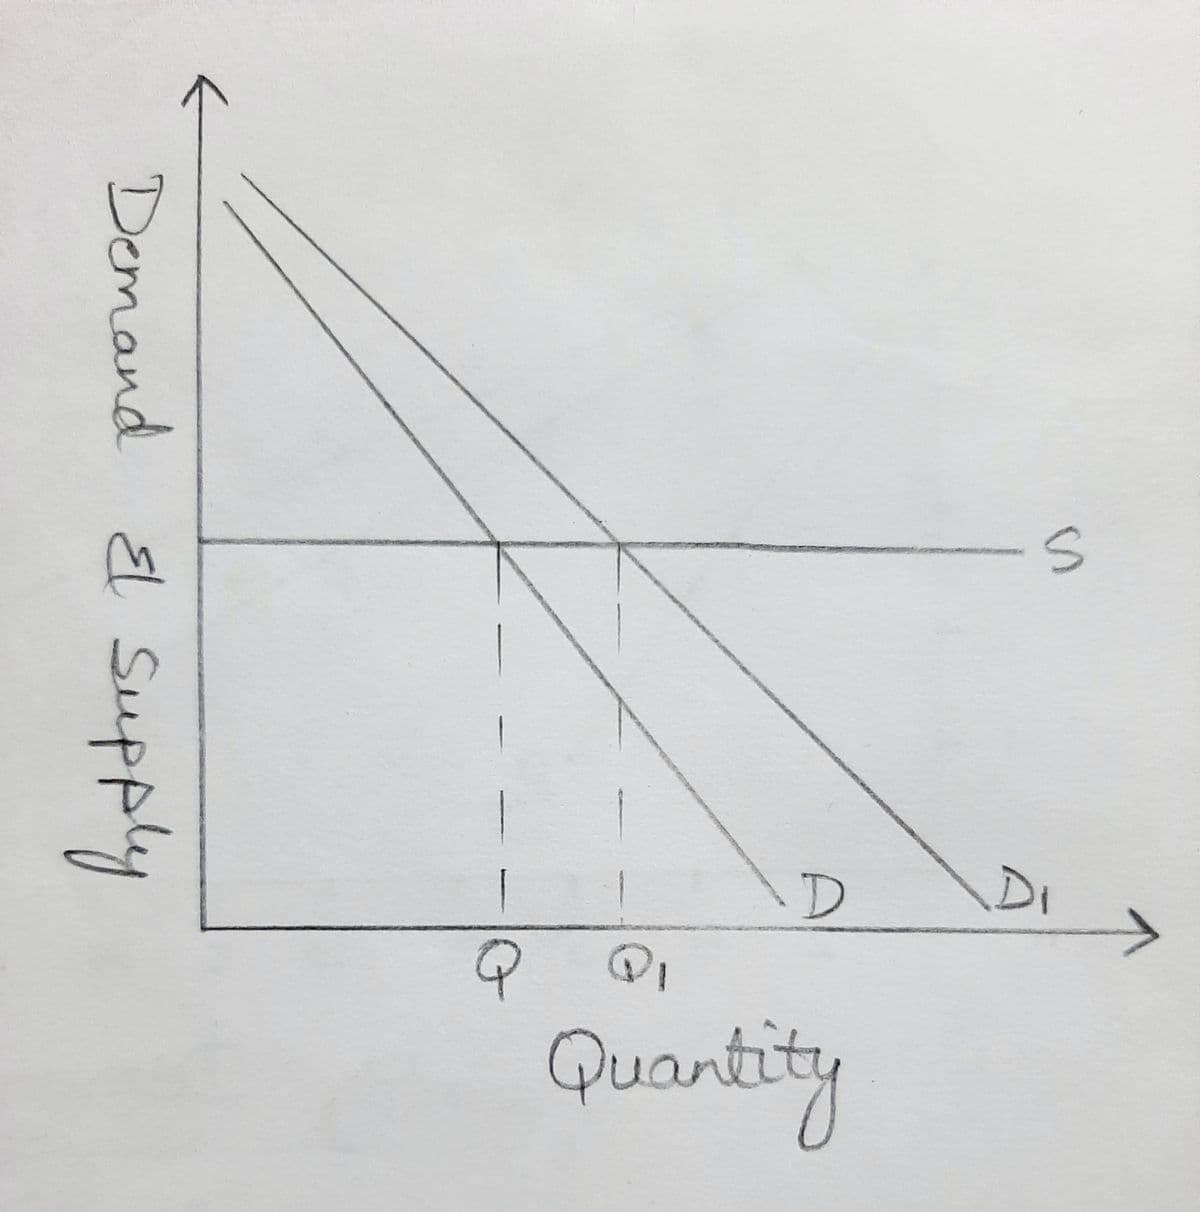 Demand & Supply
Quantity